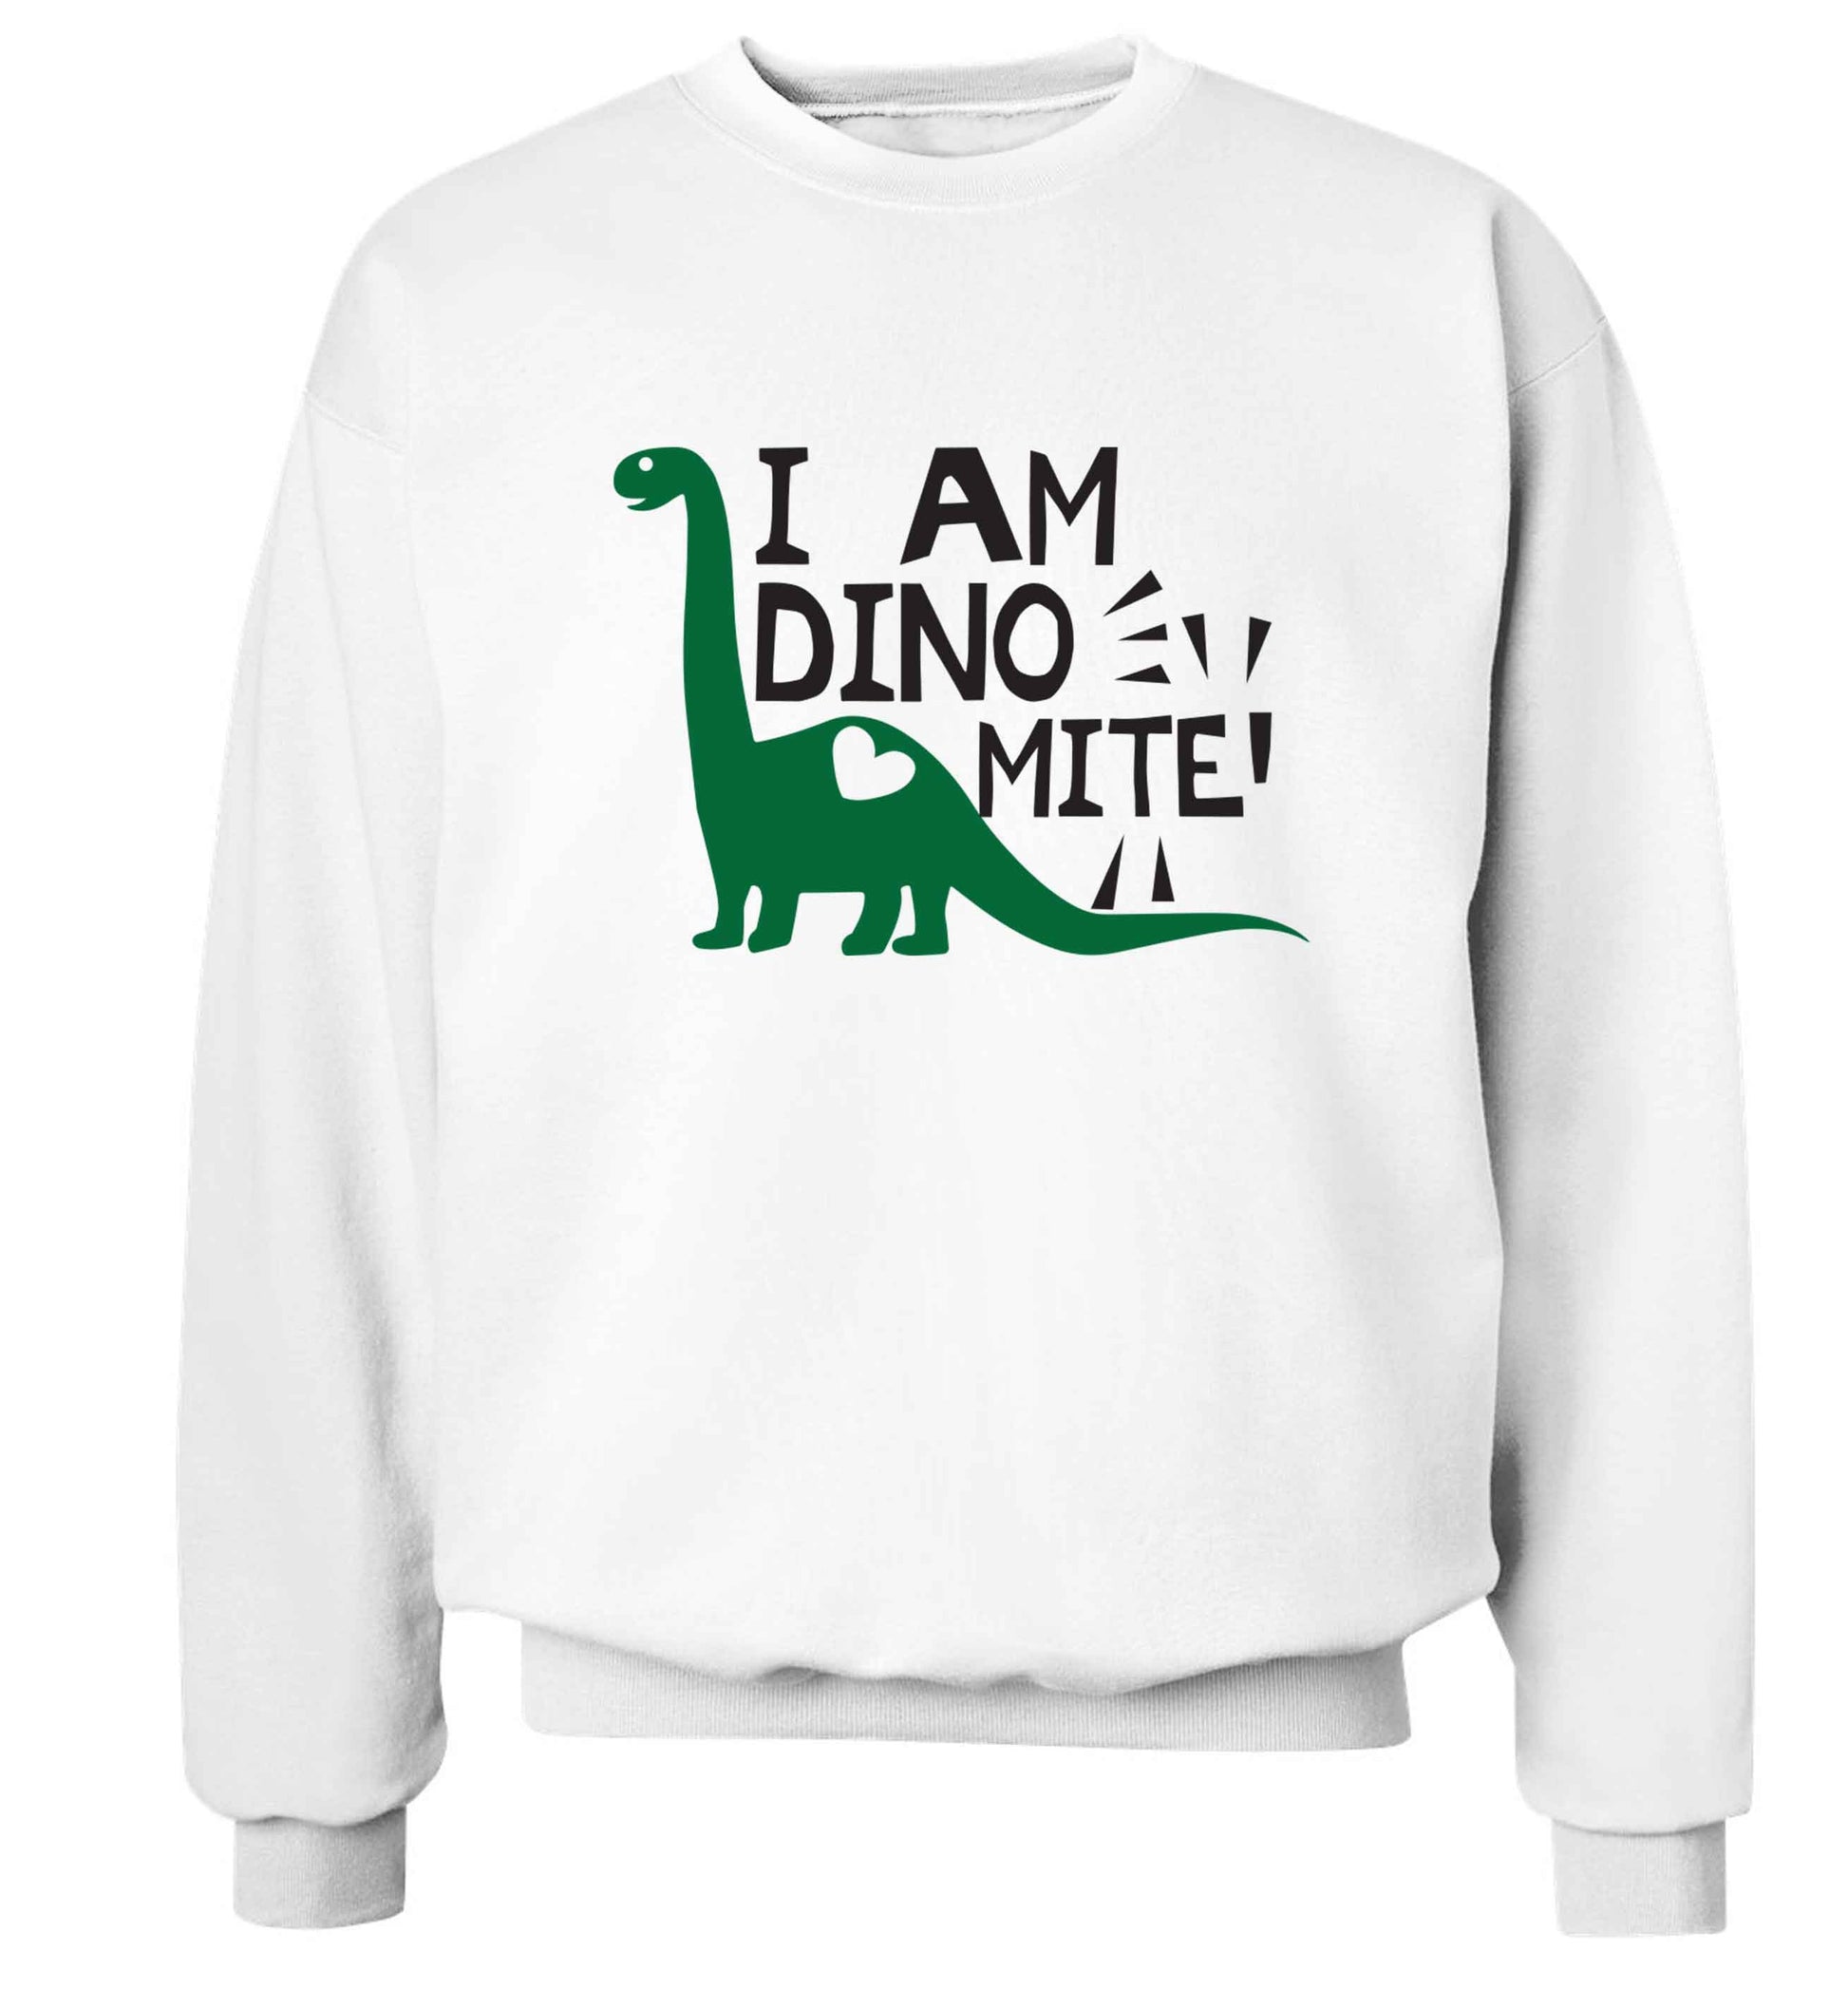 I am dinomite! Adult's unisex white Sweater 2XL